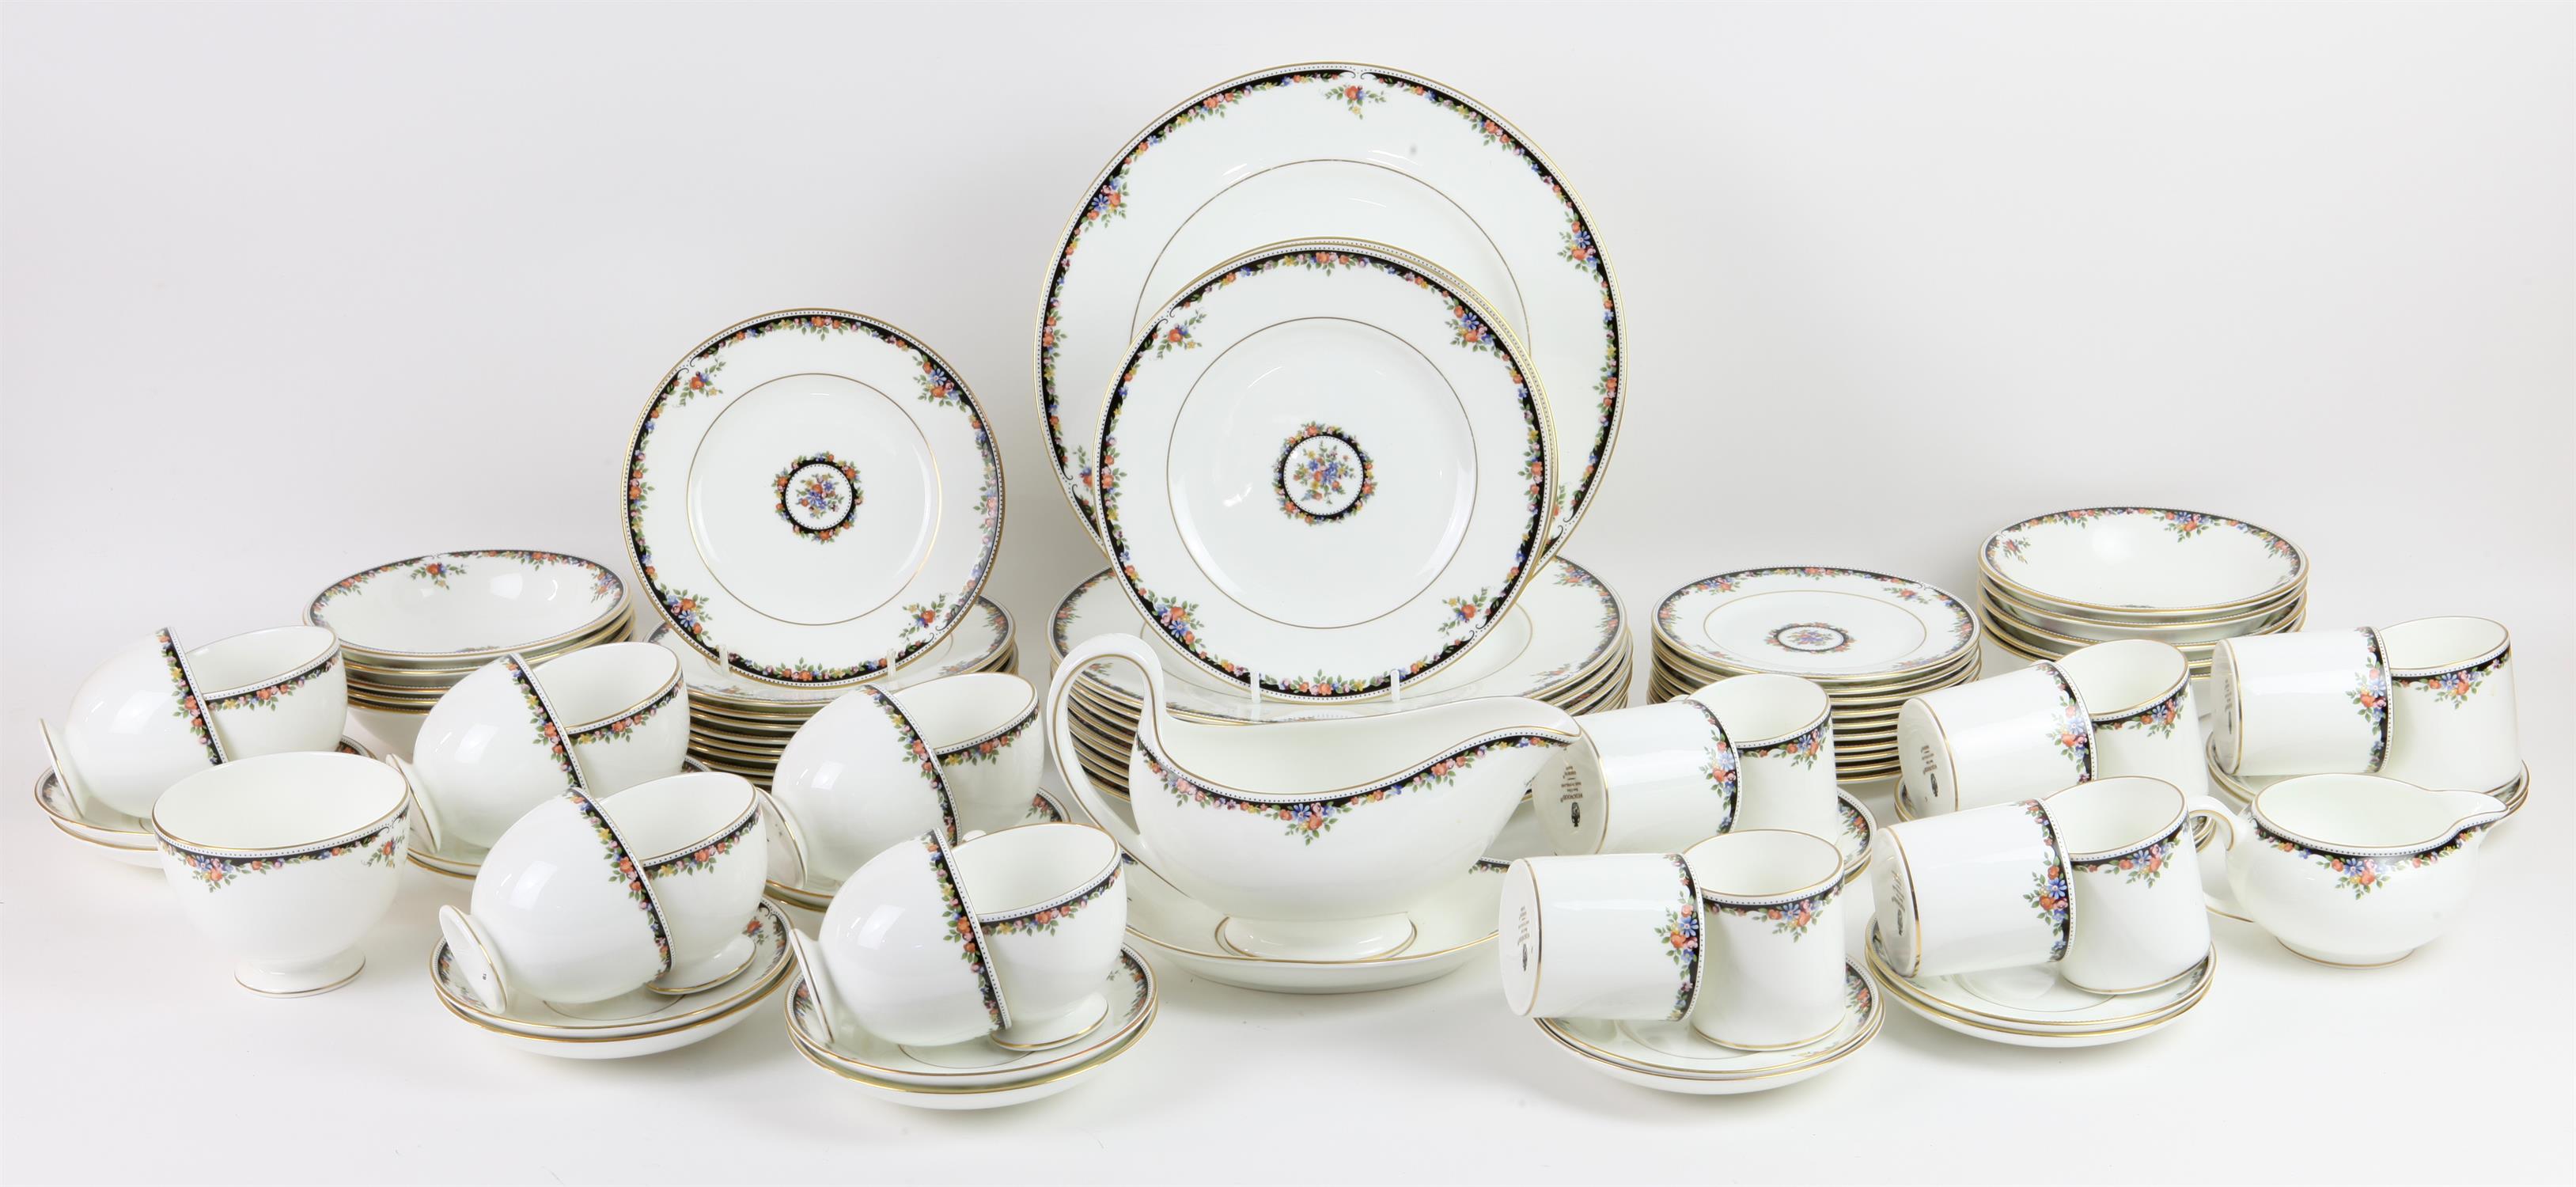 Wedgwood Osborne bone china part dinner, tea and coffee service, R4699, comprising 10 dinner plates